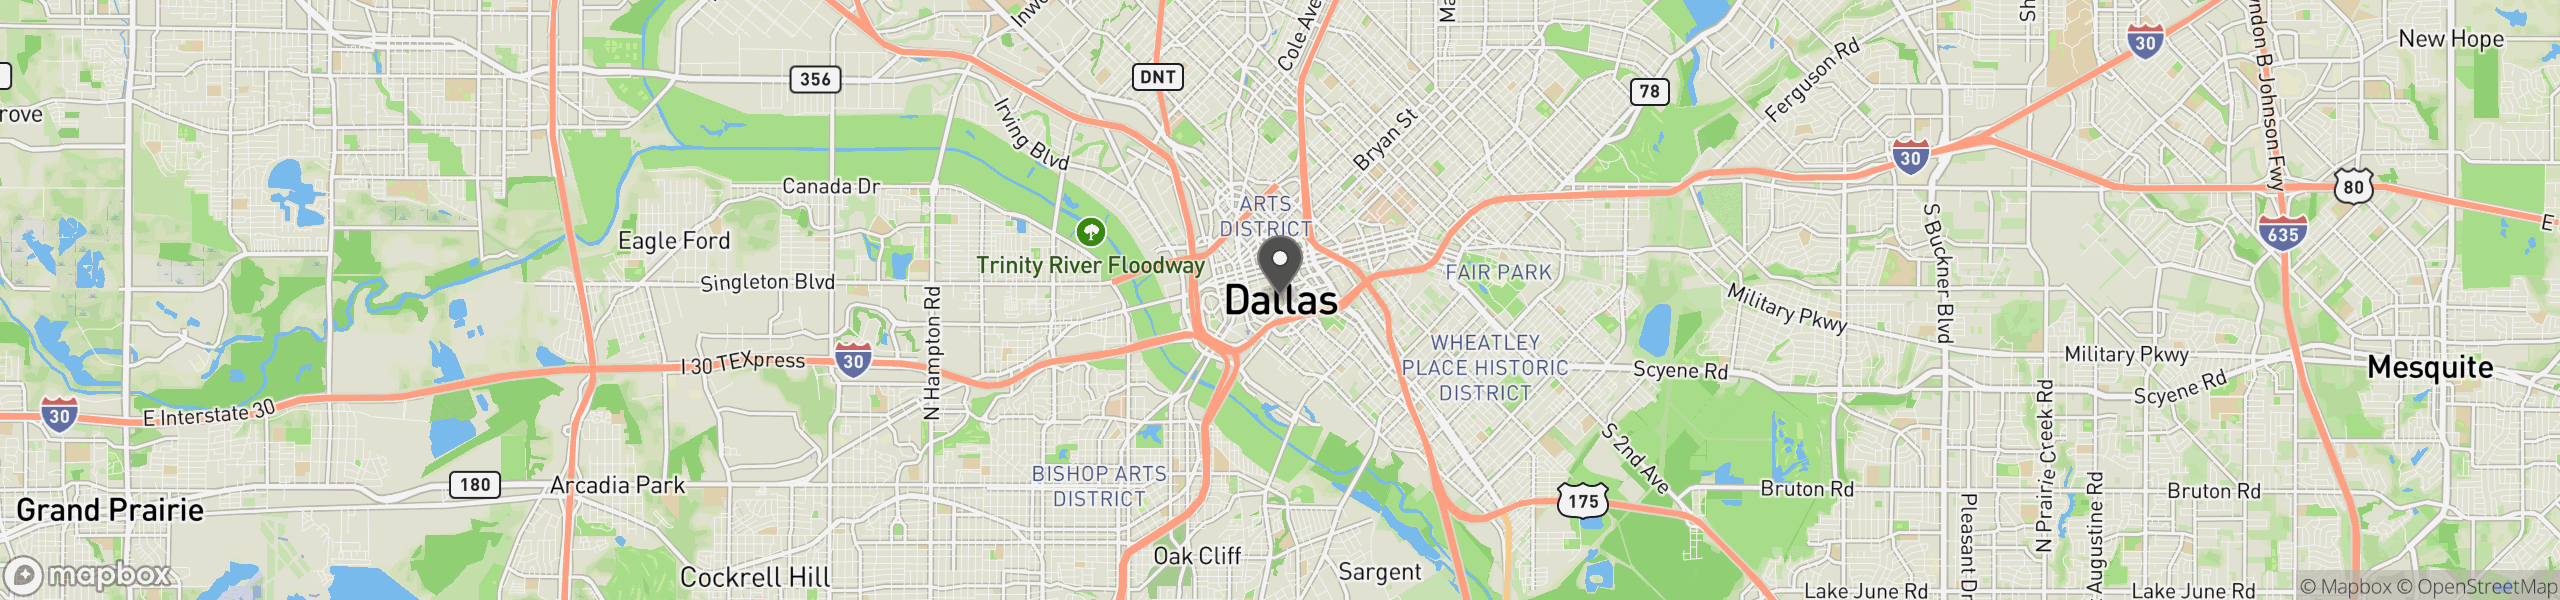 Dallas, TX 75260